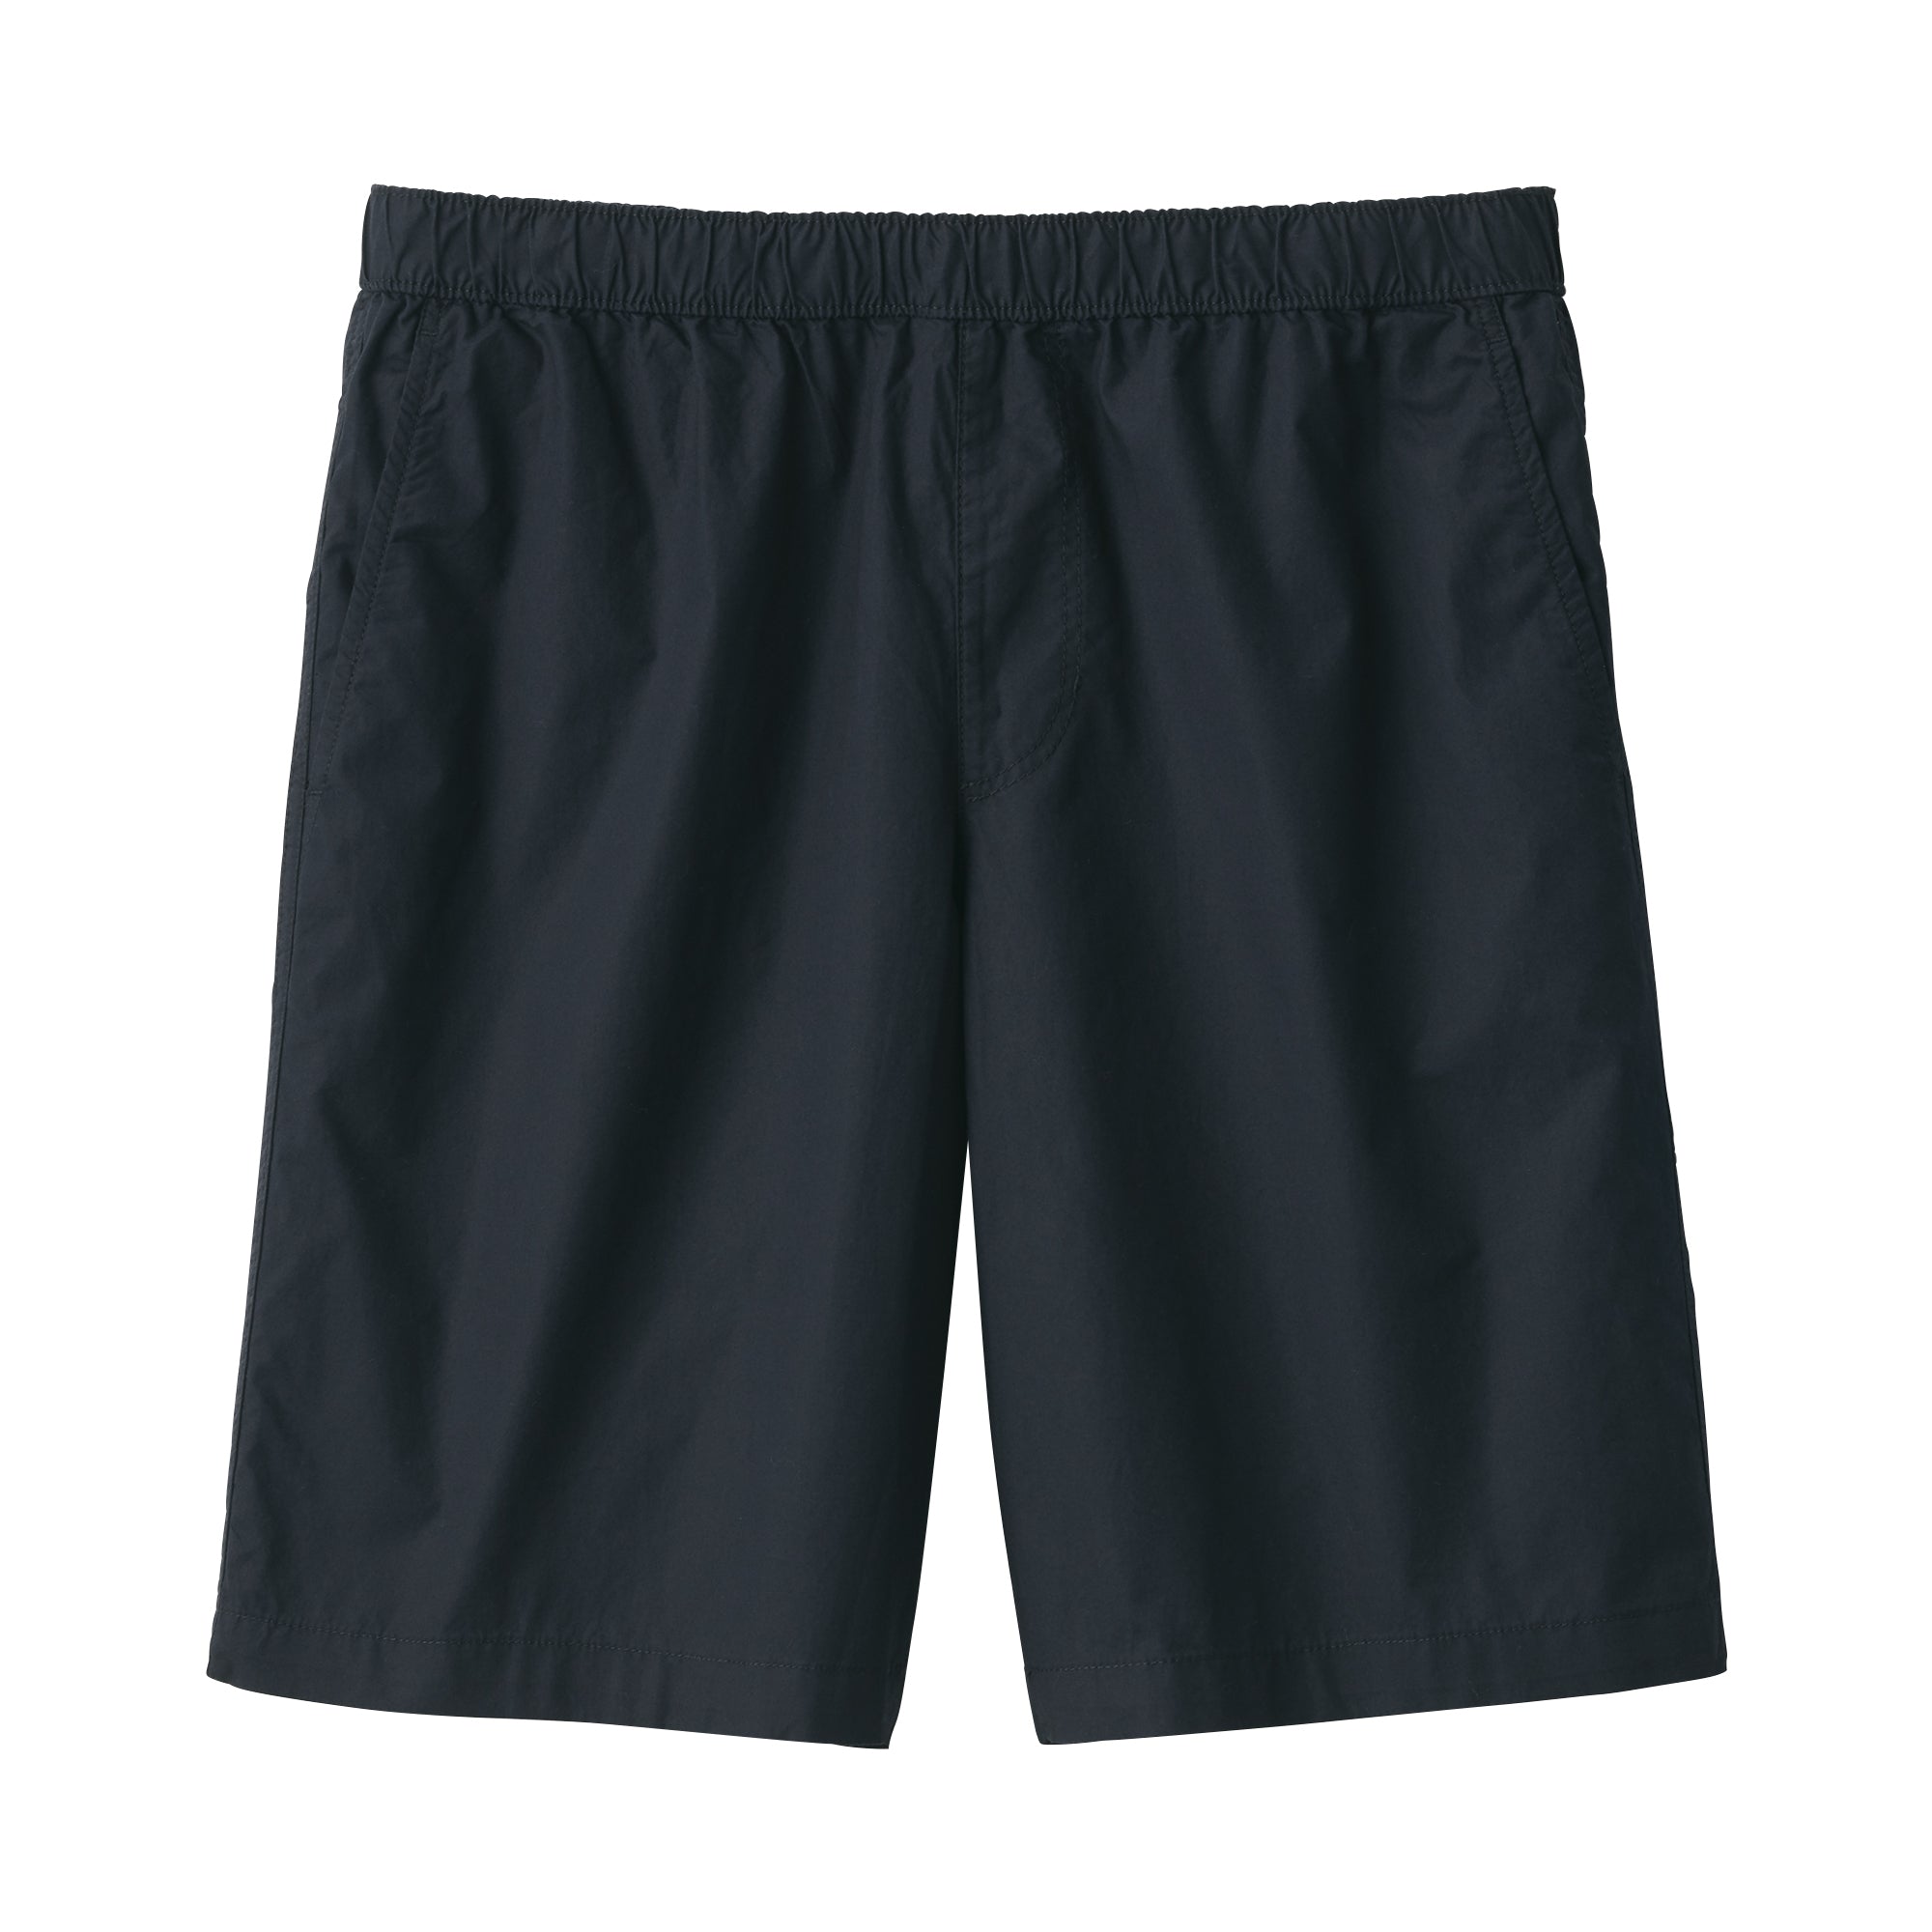 Men's Shorts, Chino & Linen Shorts